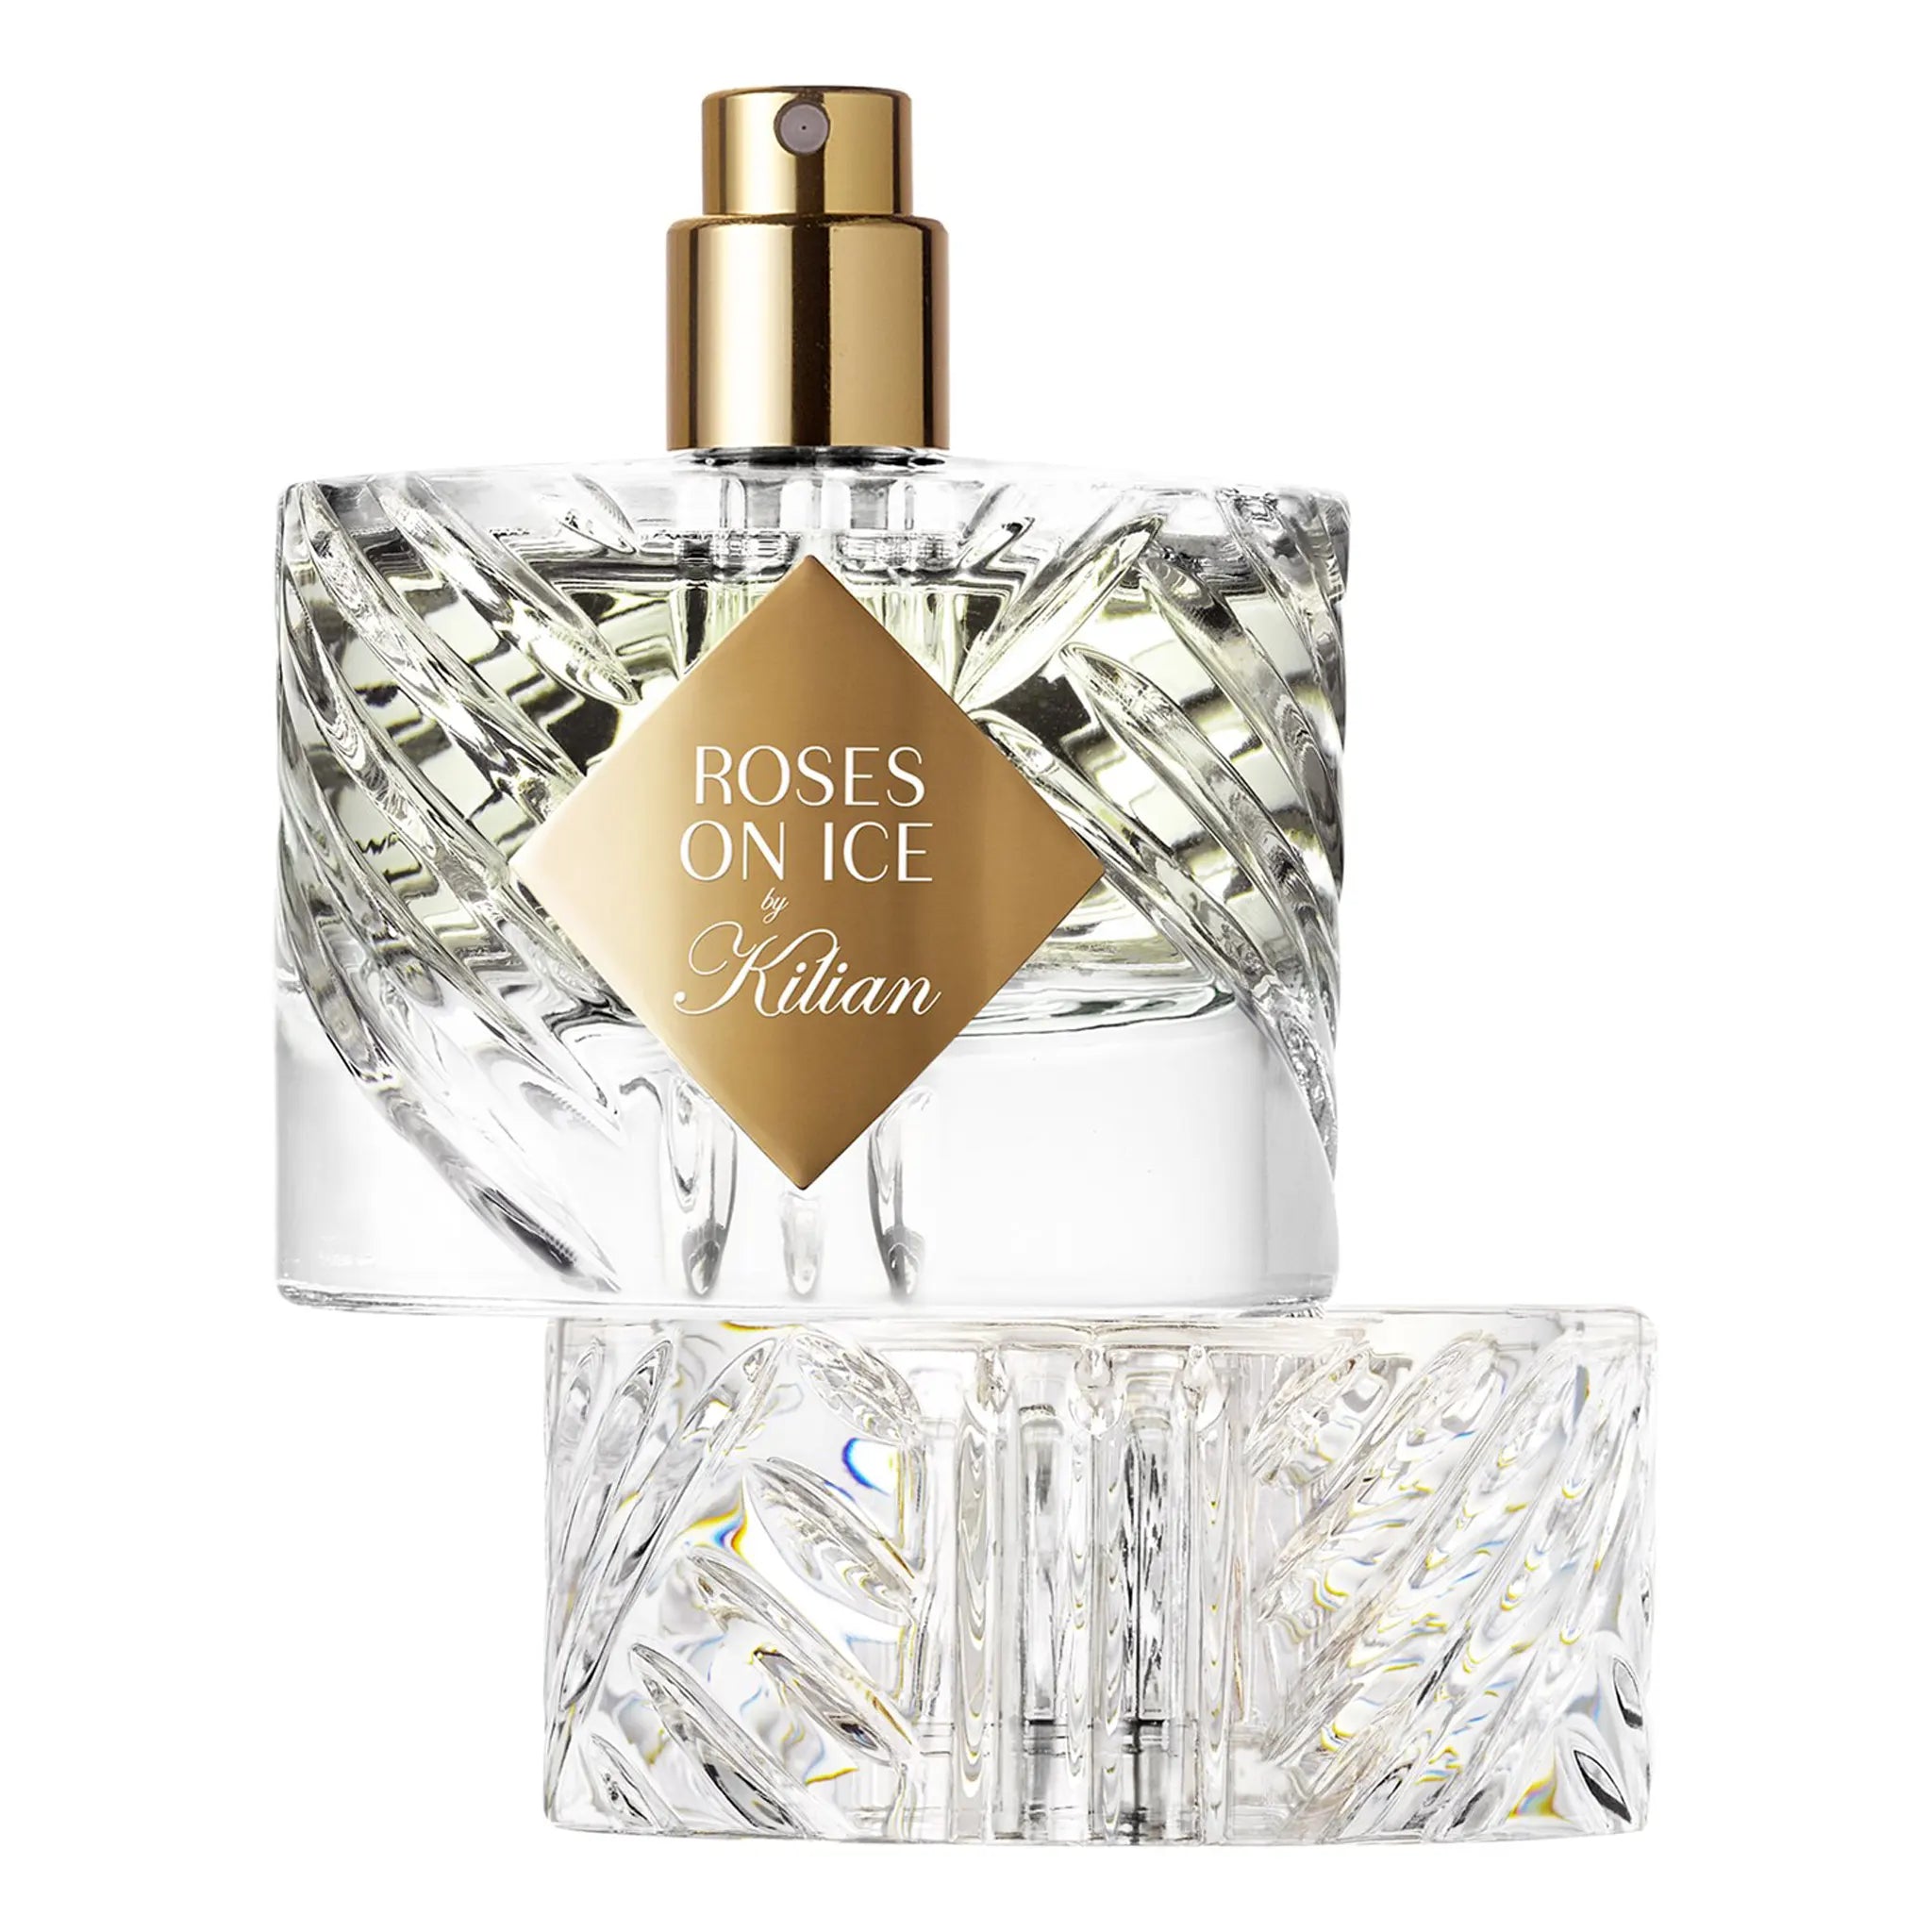 Bottle view of Kilian Paris Roses On Ice Perfume 50ml